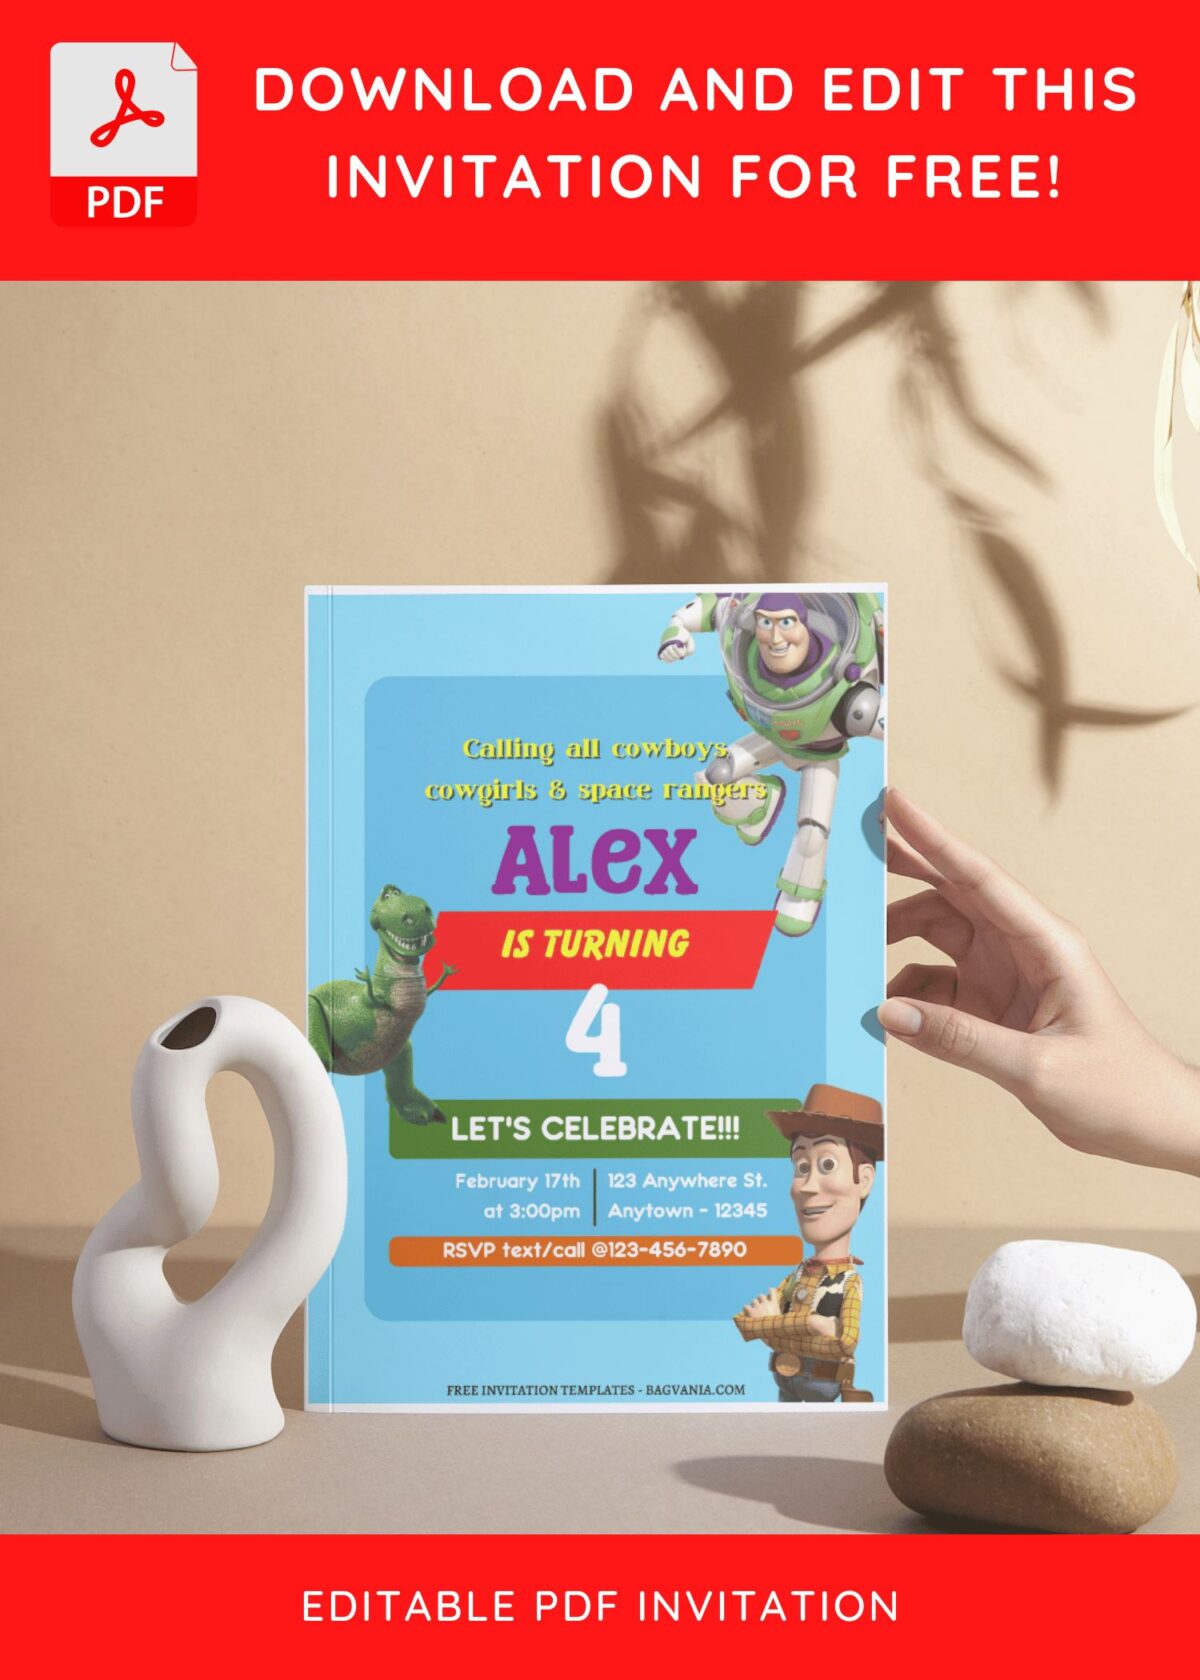 (Free Editable PDF) Toy Story Playtime Birthday Invitation Templates I